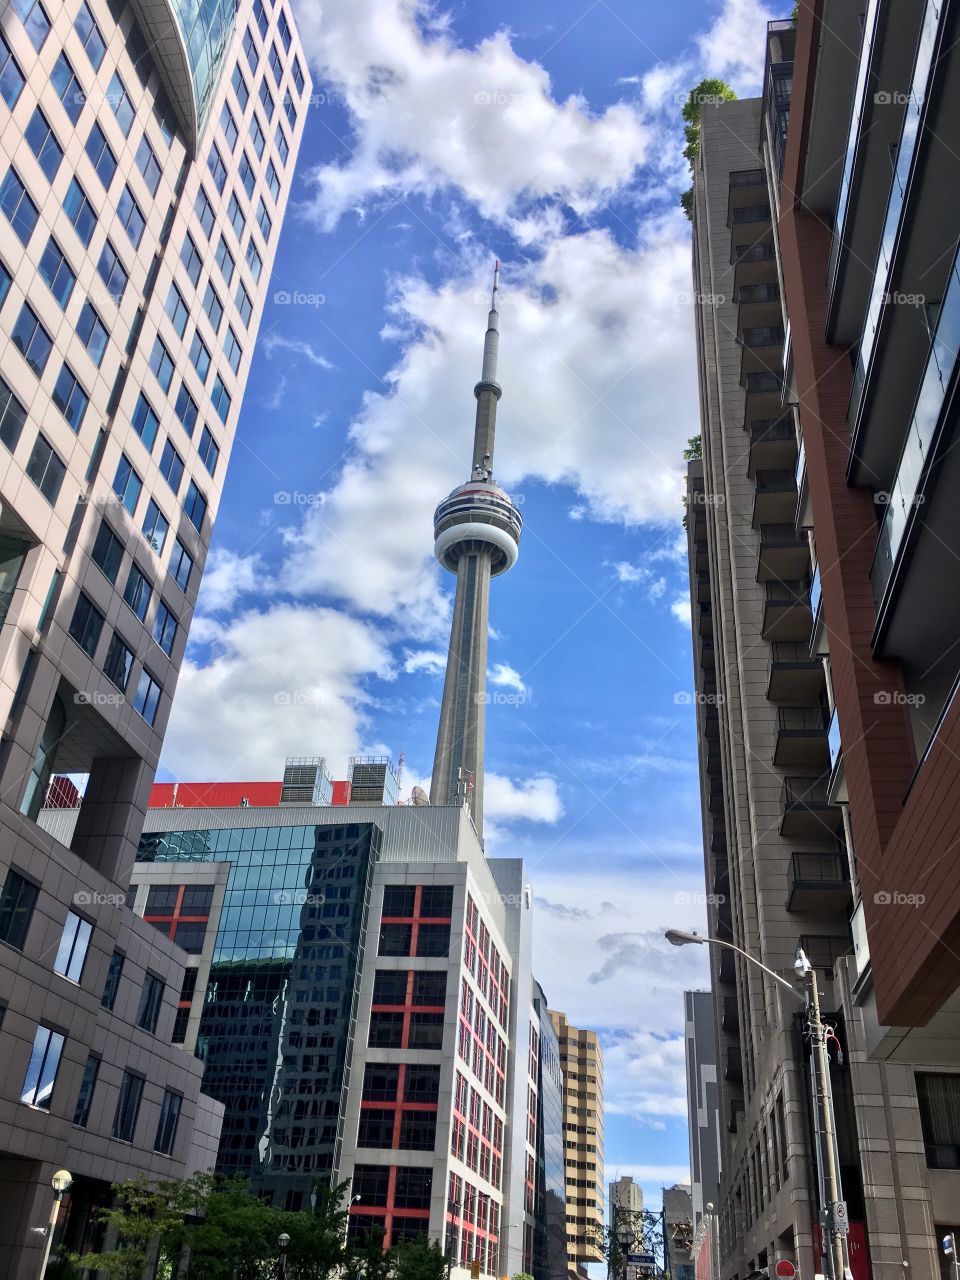 CN Tower street view